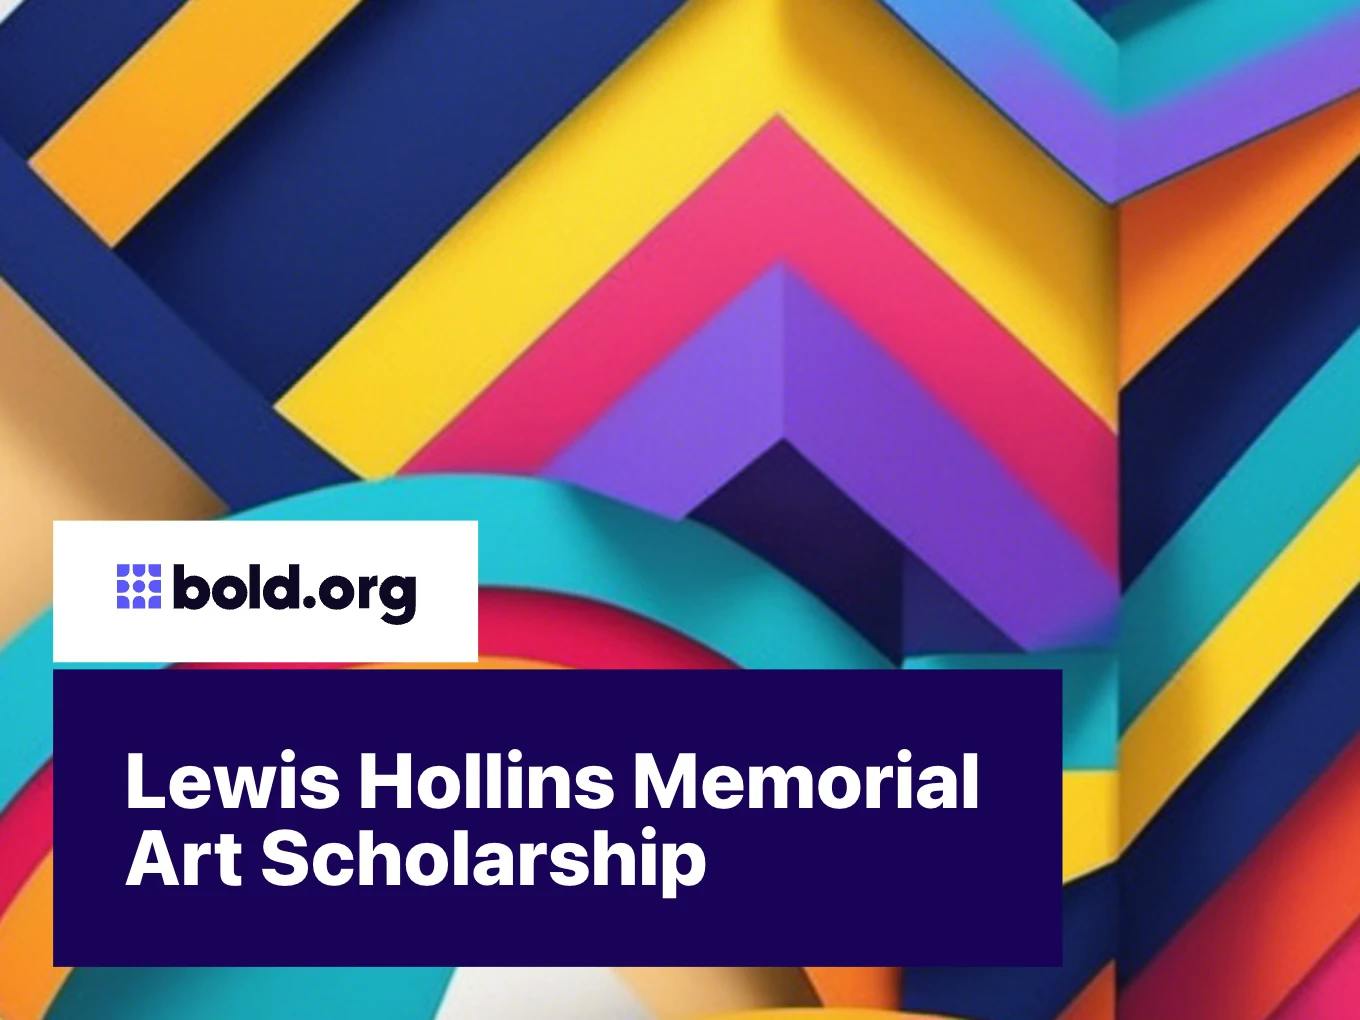 Lewis Hollins Memorial Art Scholarship